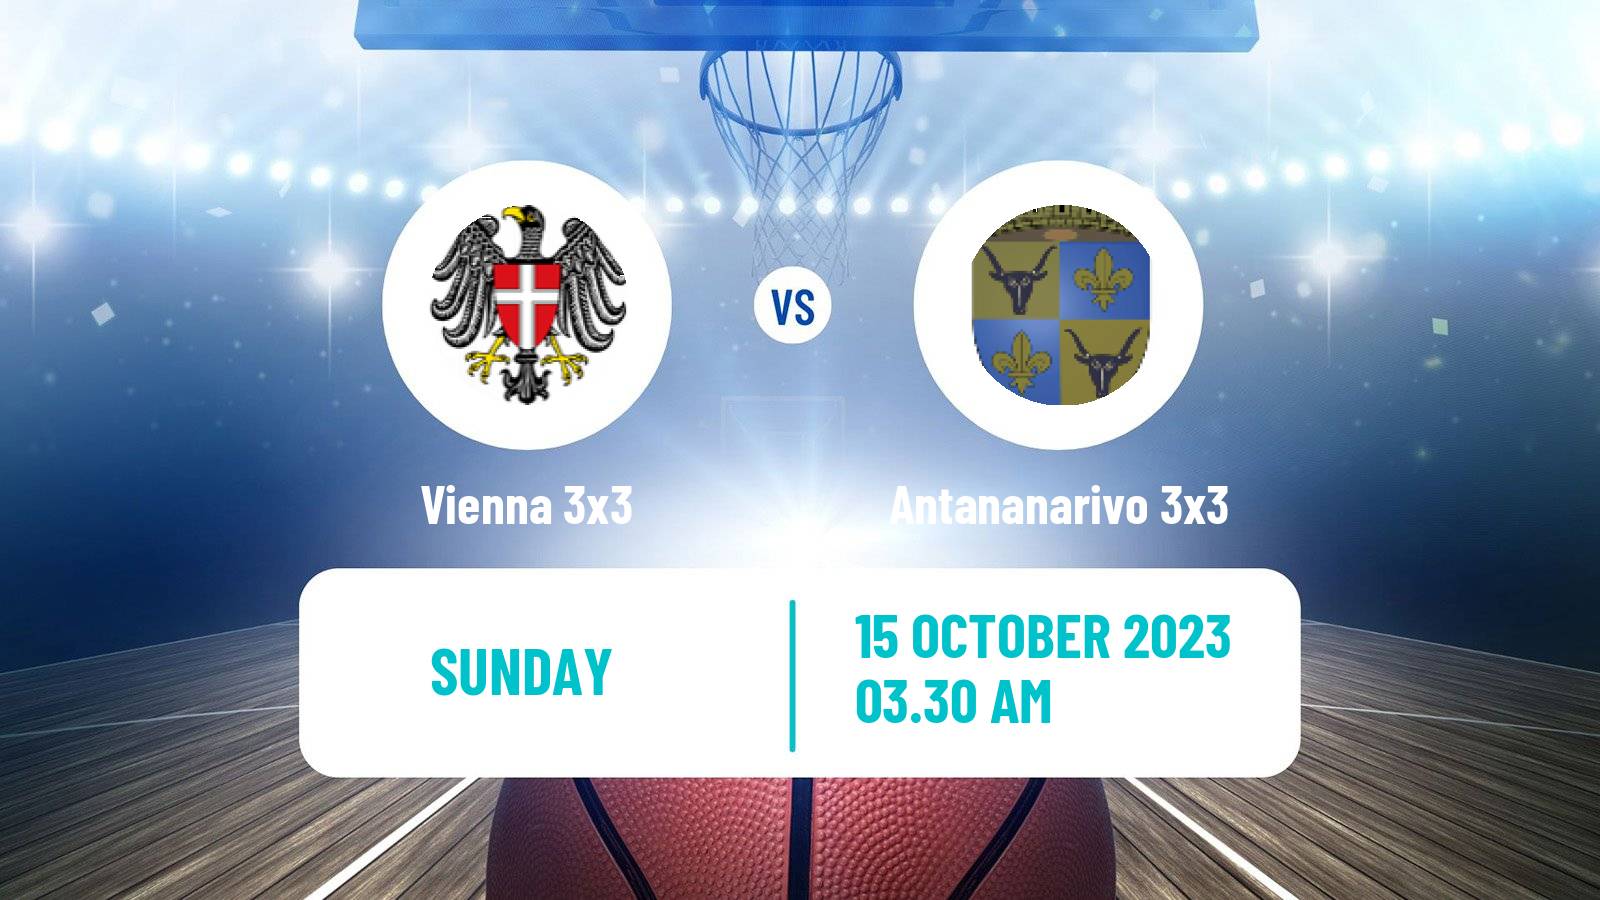 Basketball World Tour Shanghai 3x3 Vienna 3x3 - Antananarivo 3x3